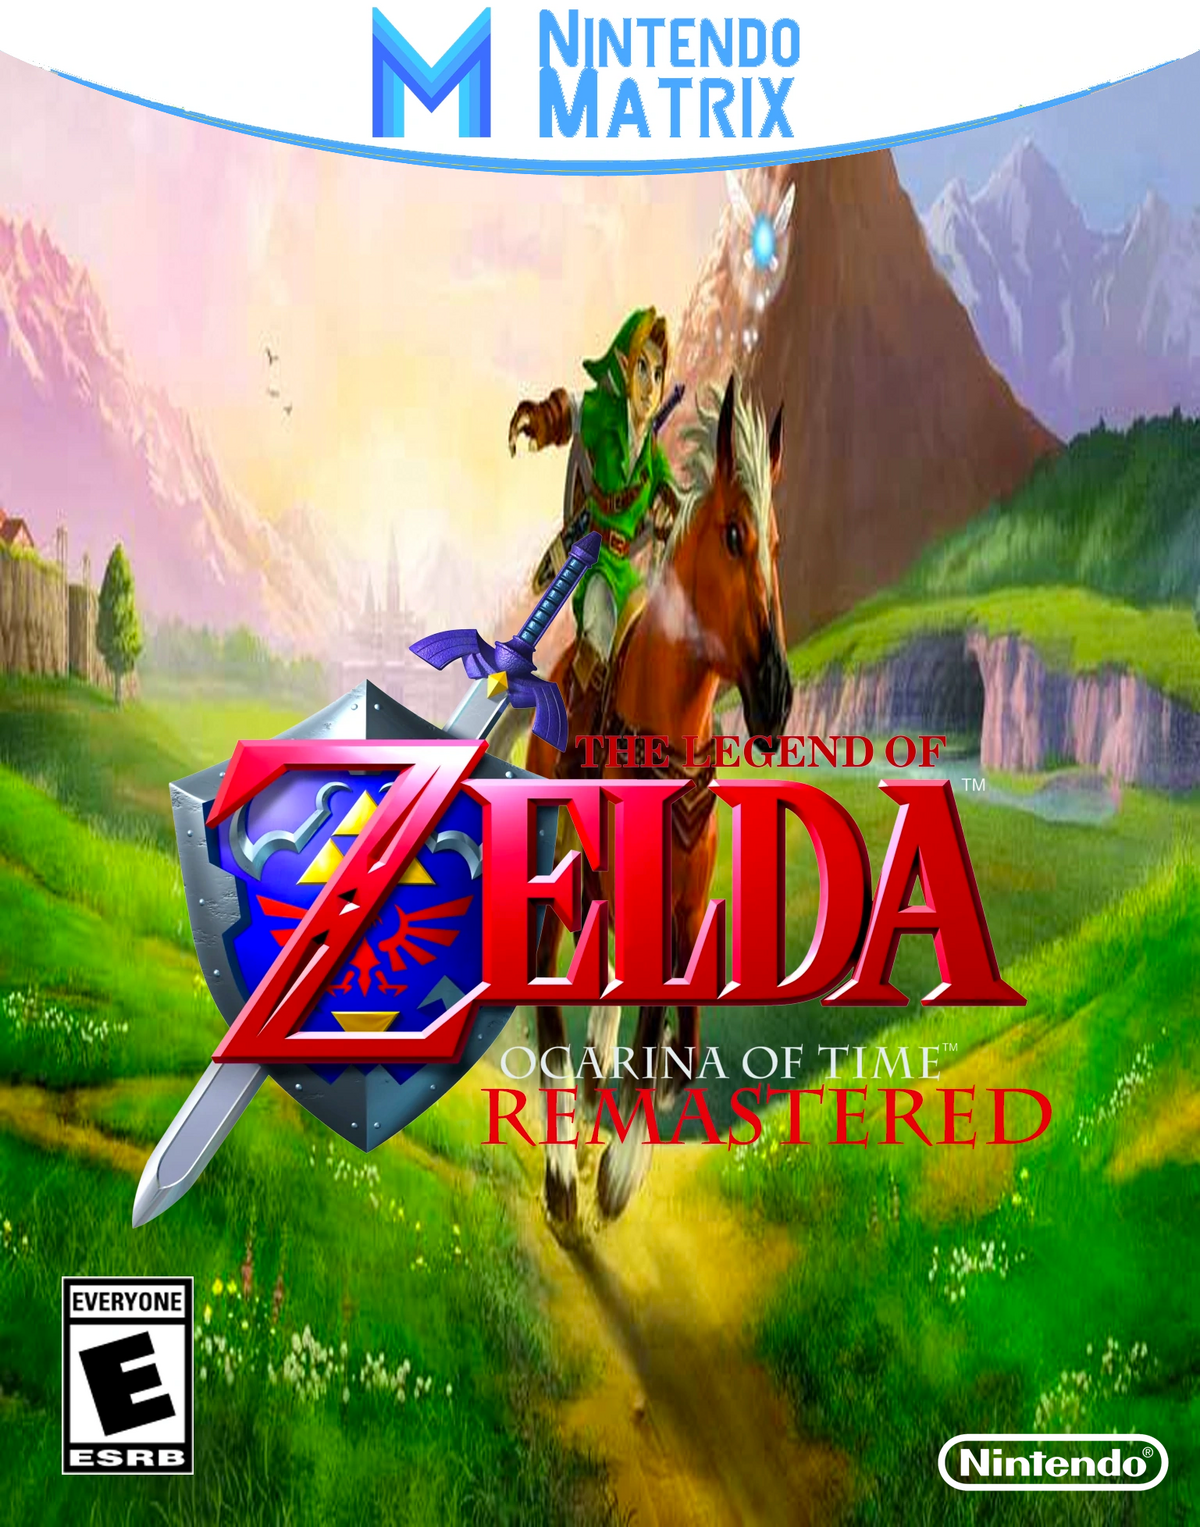 The Legend of Zelda: Ocarina of Time 3D : Video  